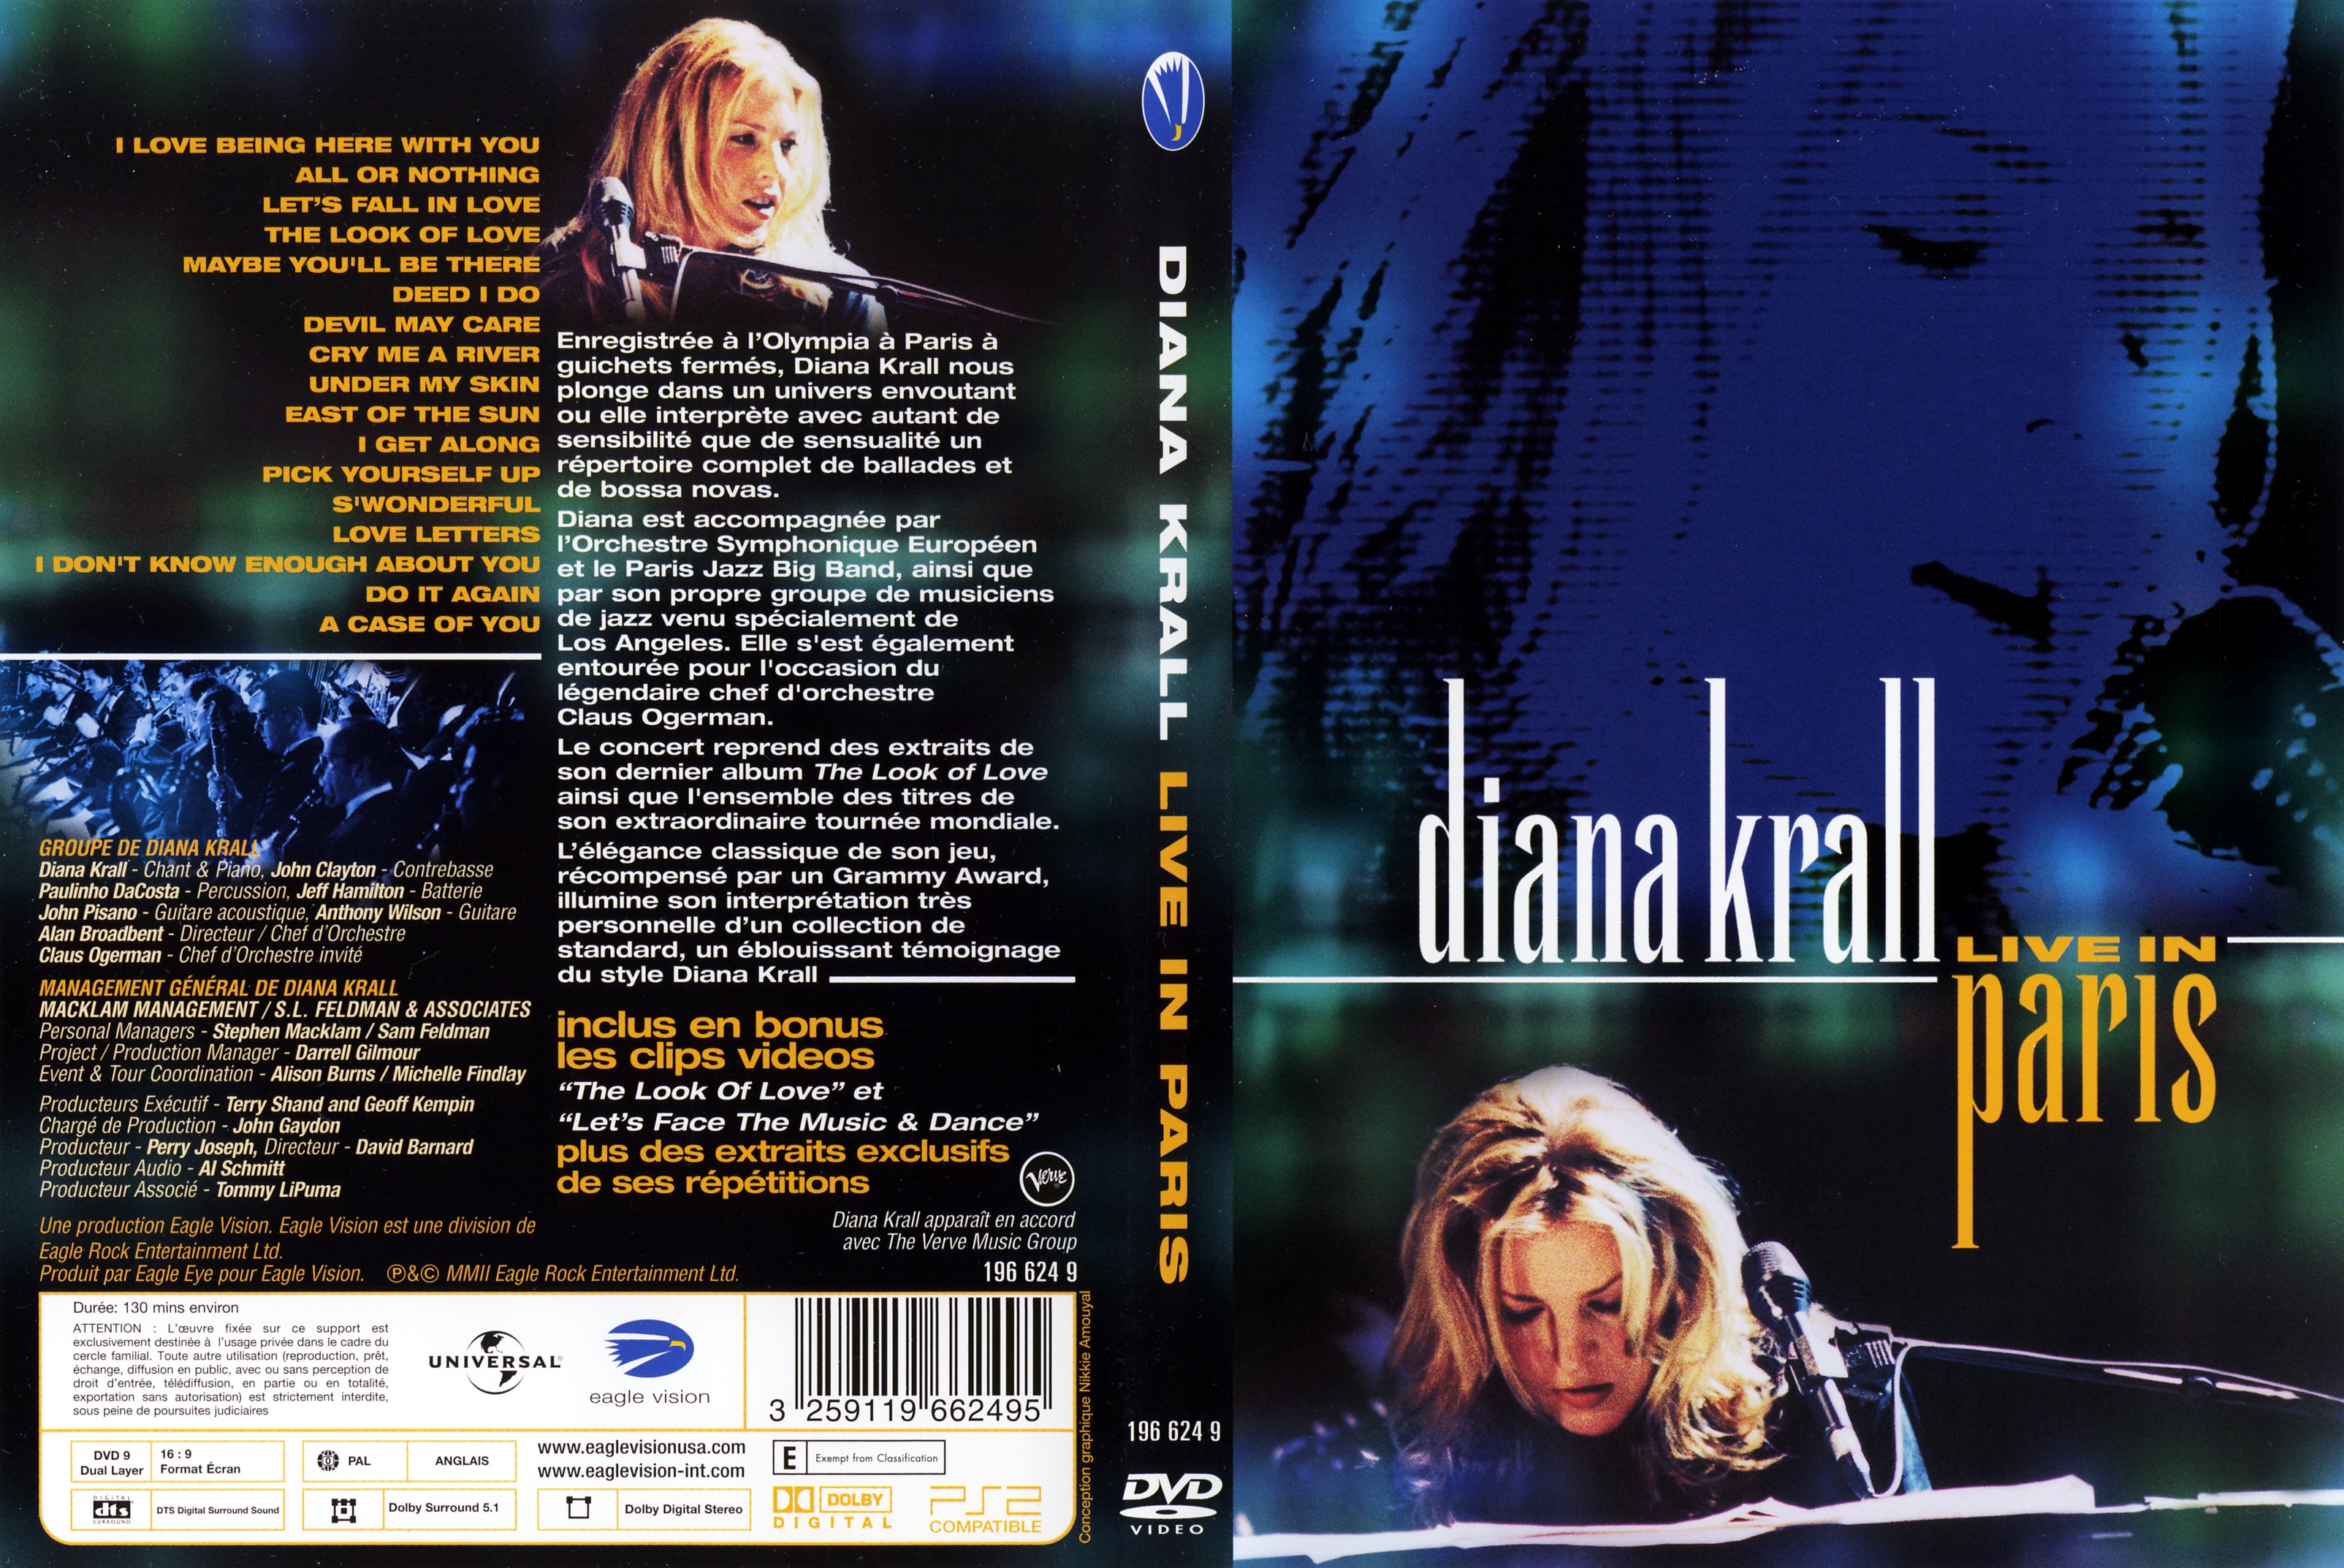 Jaquette DVD Diana krall Live in Paris